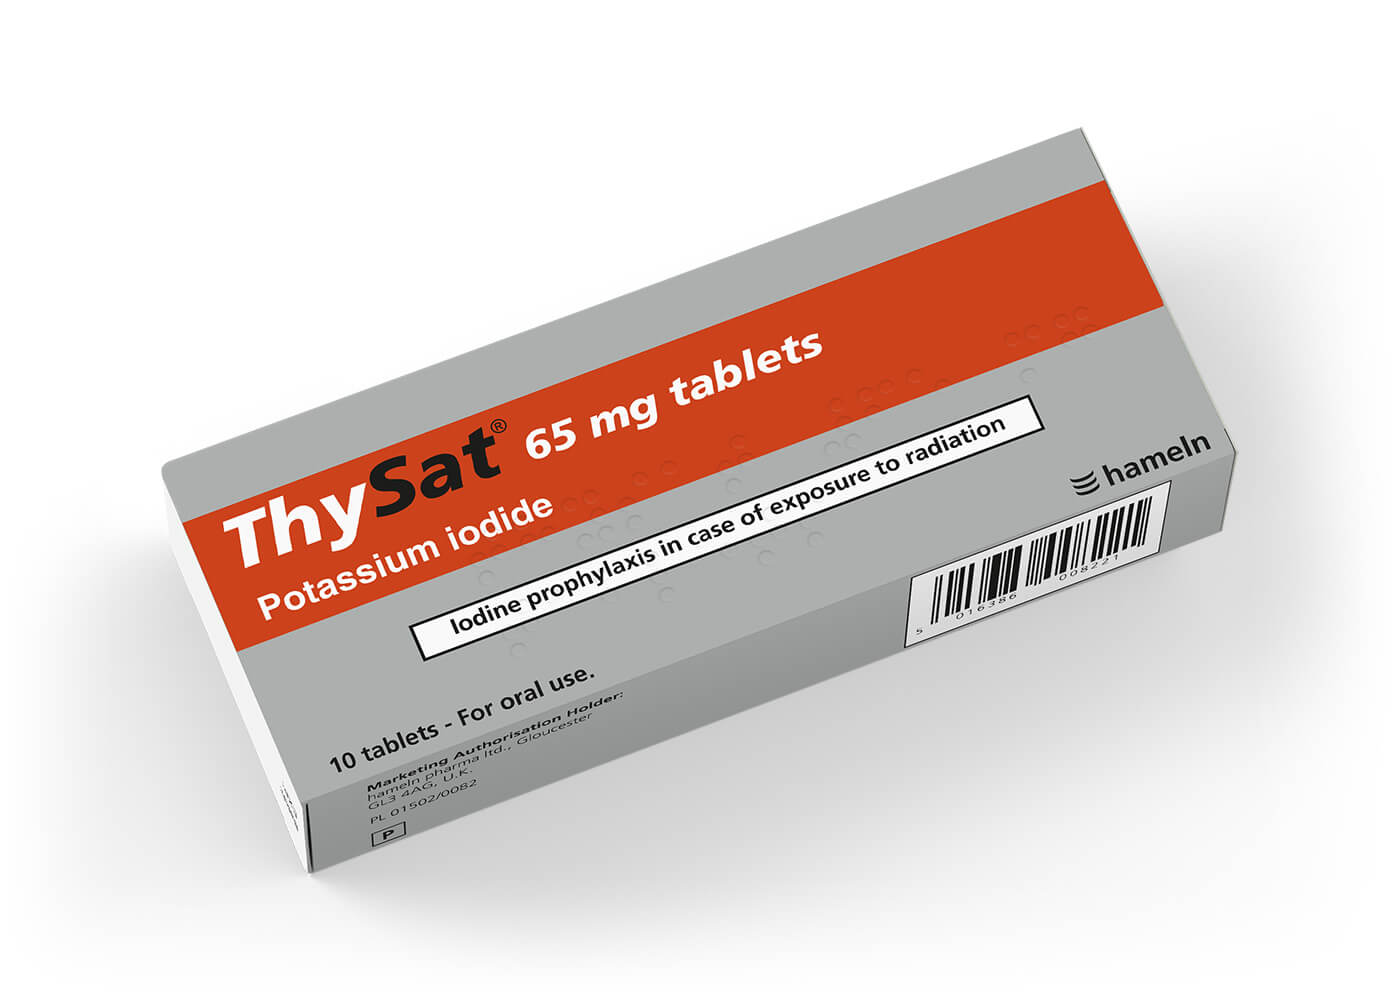 ThySat_UK_65_mg_10tablets_2021-19